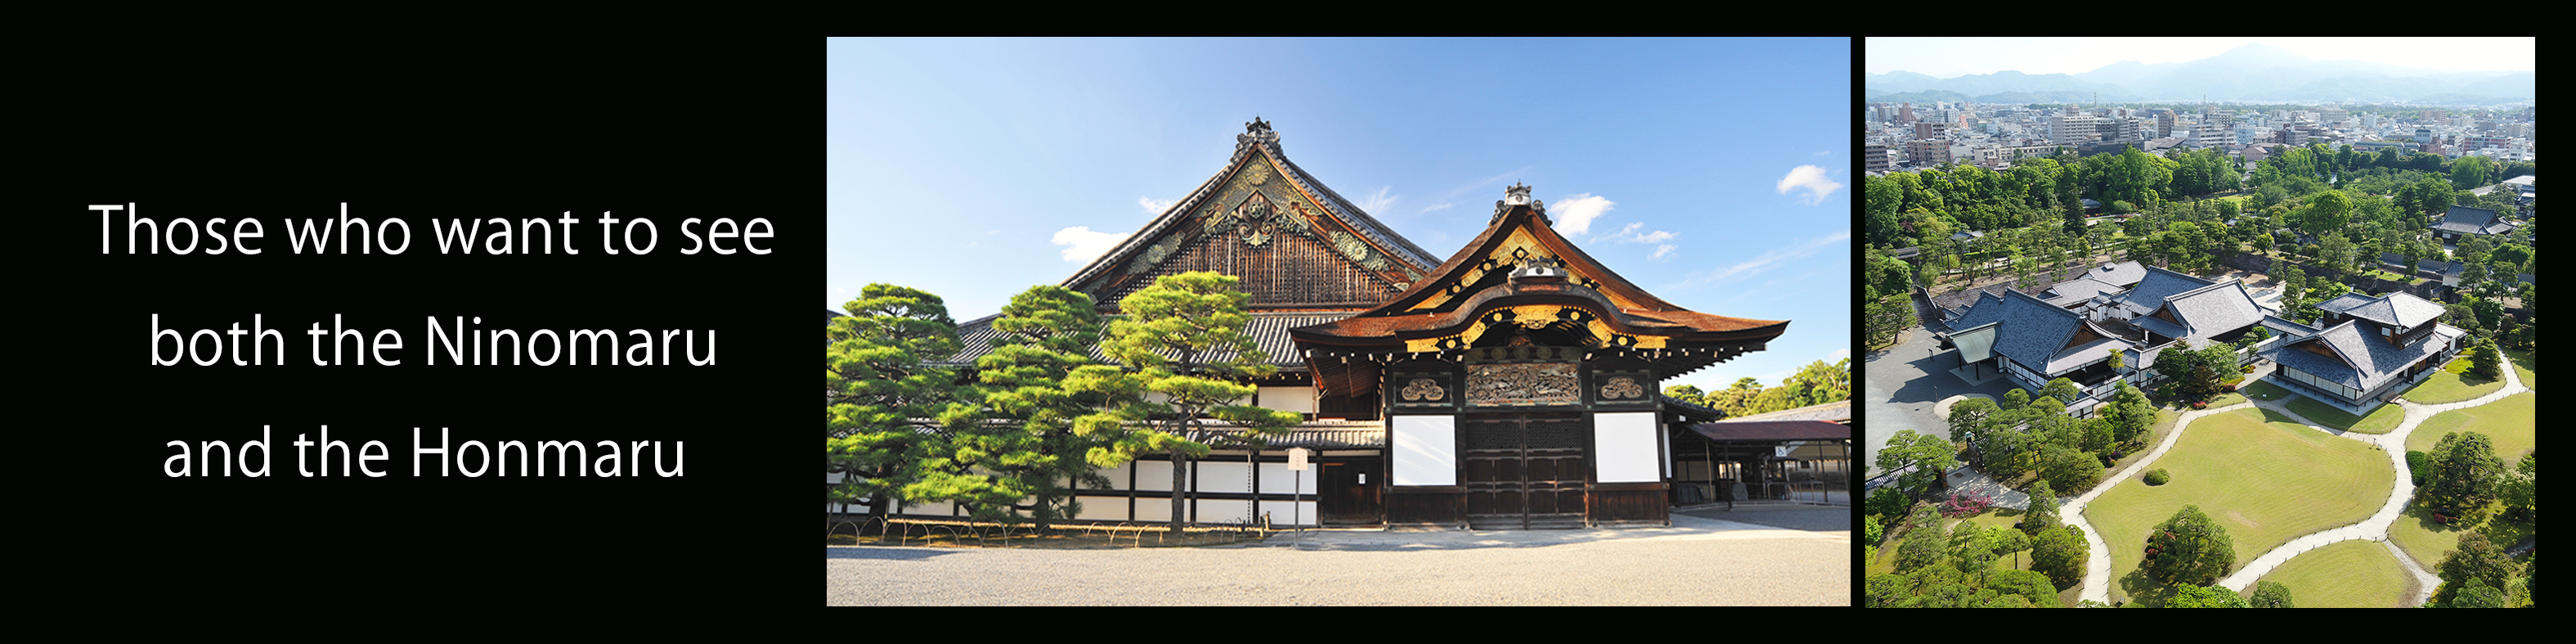 Those who wish to view both Honmaru-goten Palace and Ninomaru-goten Palace